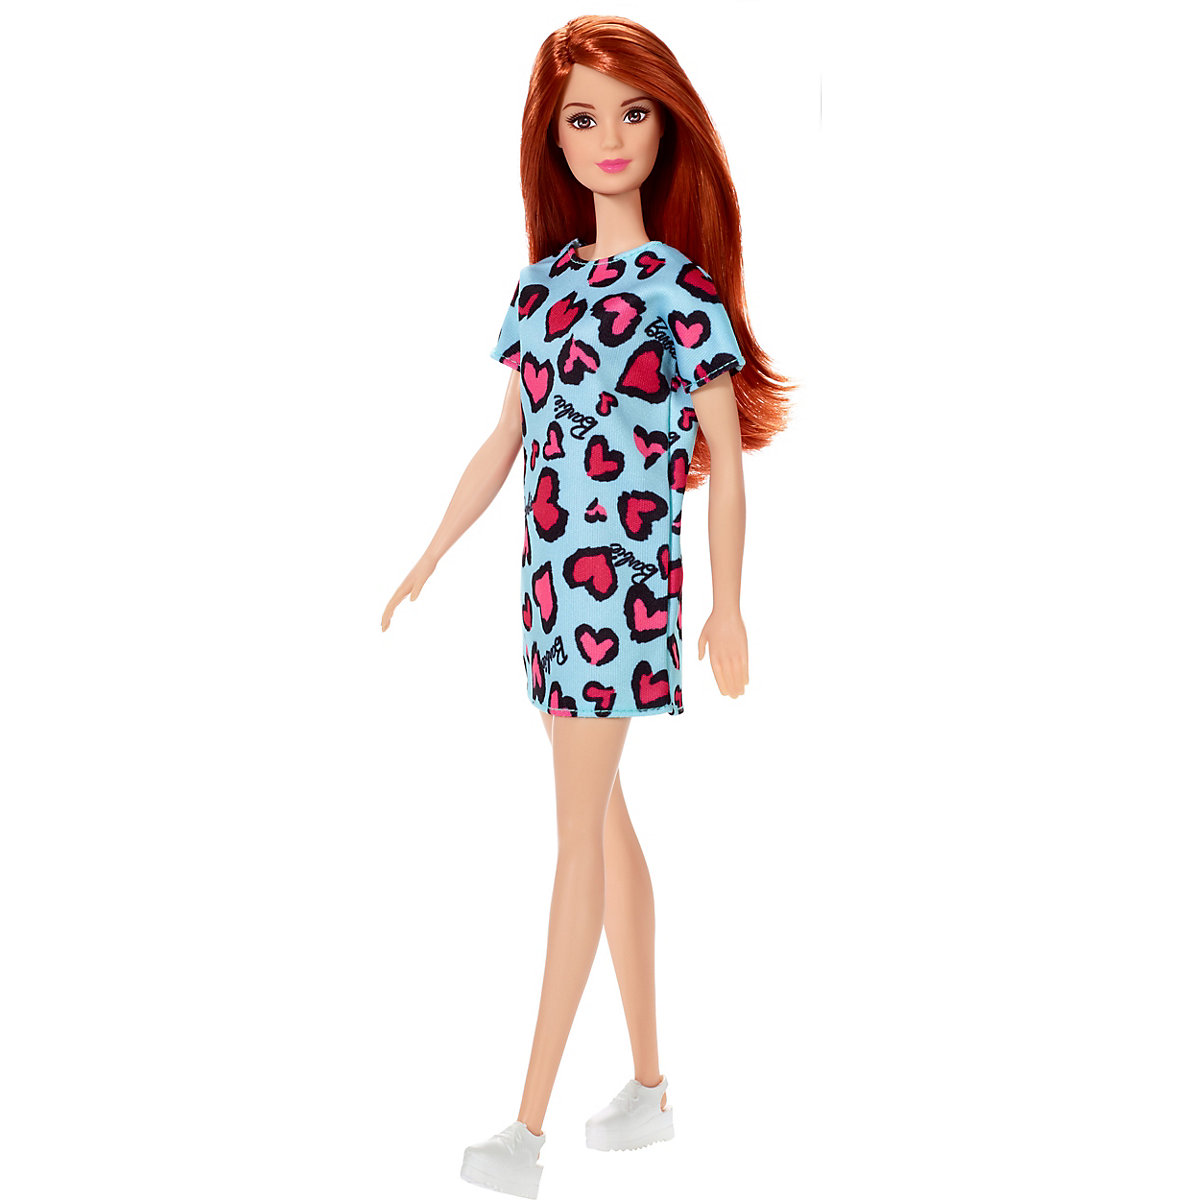 Barbie Chic Puppe (rote Haare) mit Kleid, Anziehpuppe ...